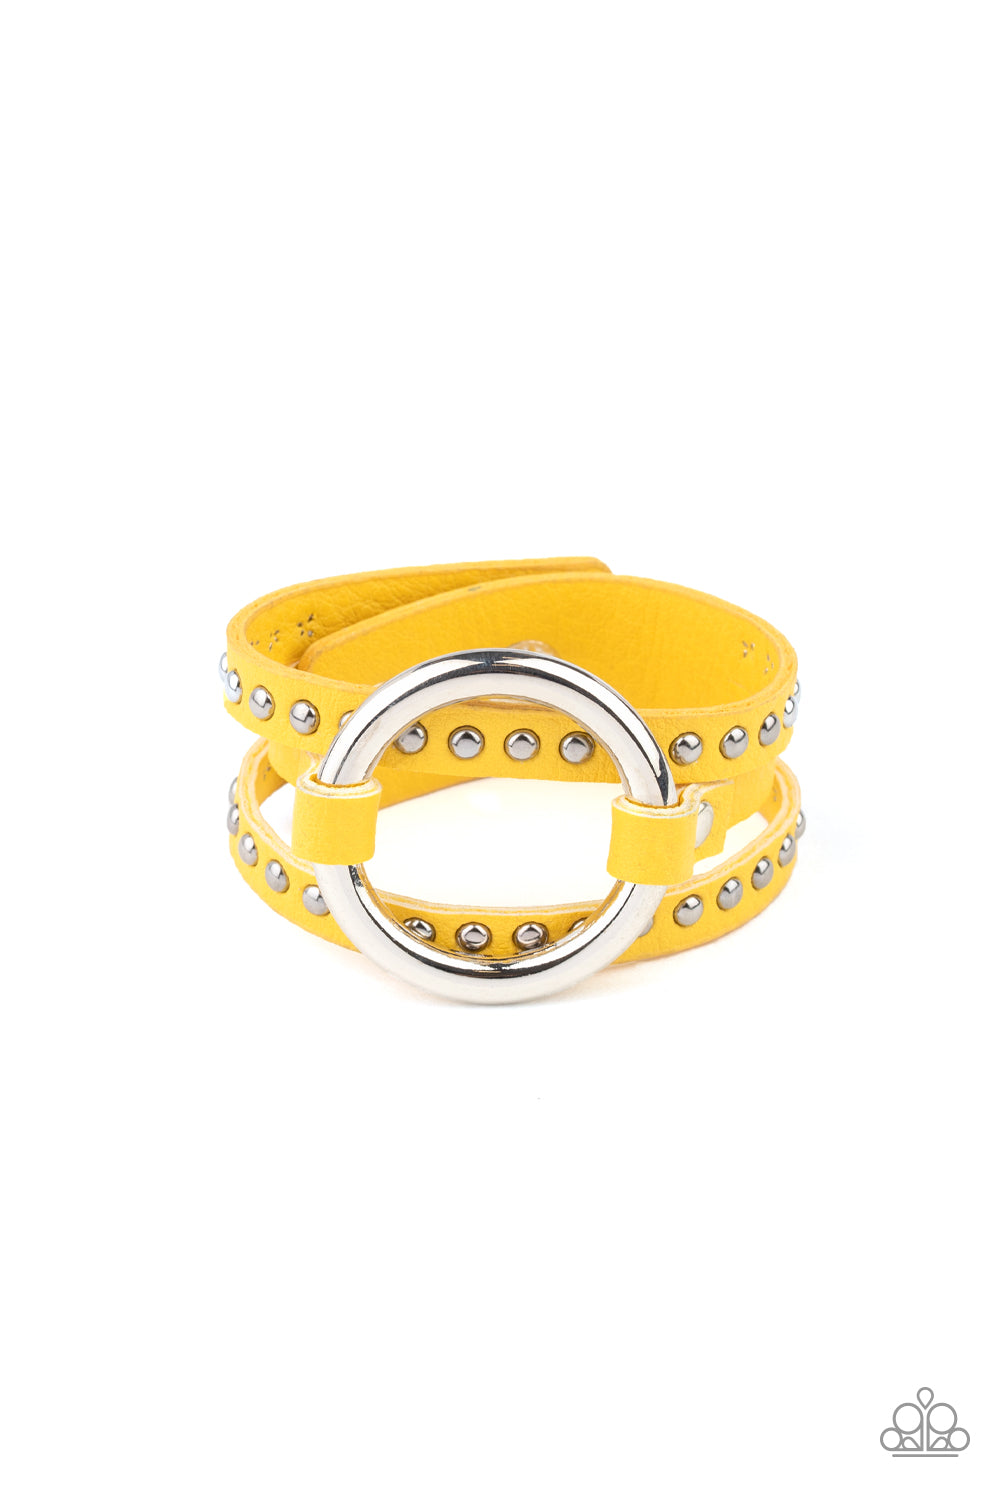 Studded Statement-Maker - Yellow Bracelet - Paparazzi Accessories - Paparazzi Accessories 